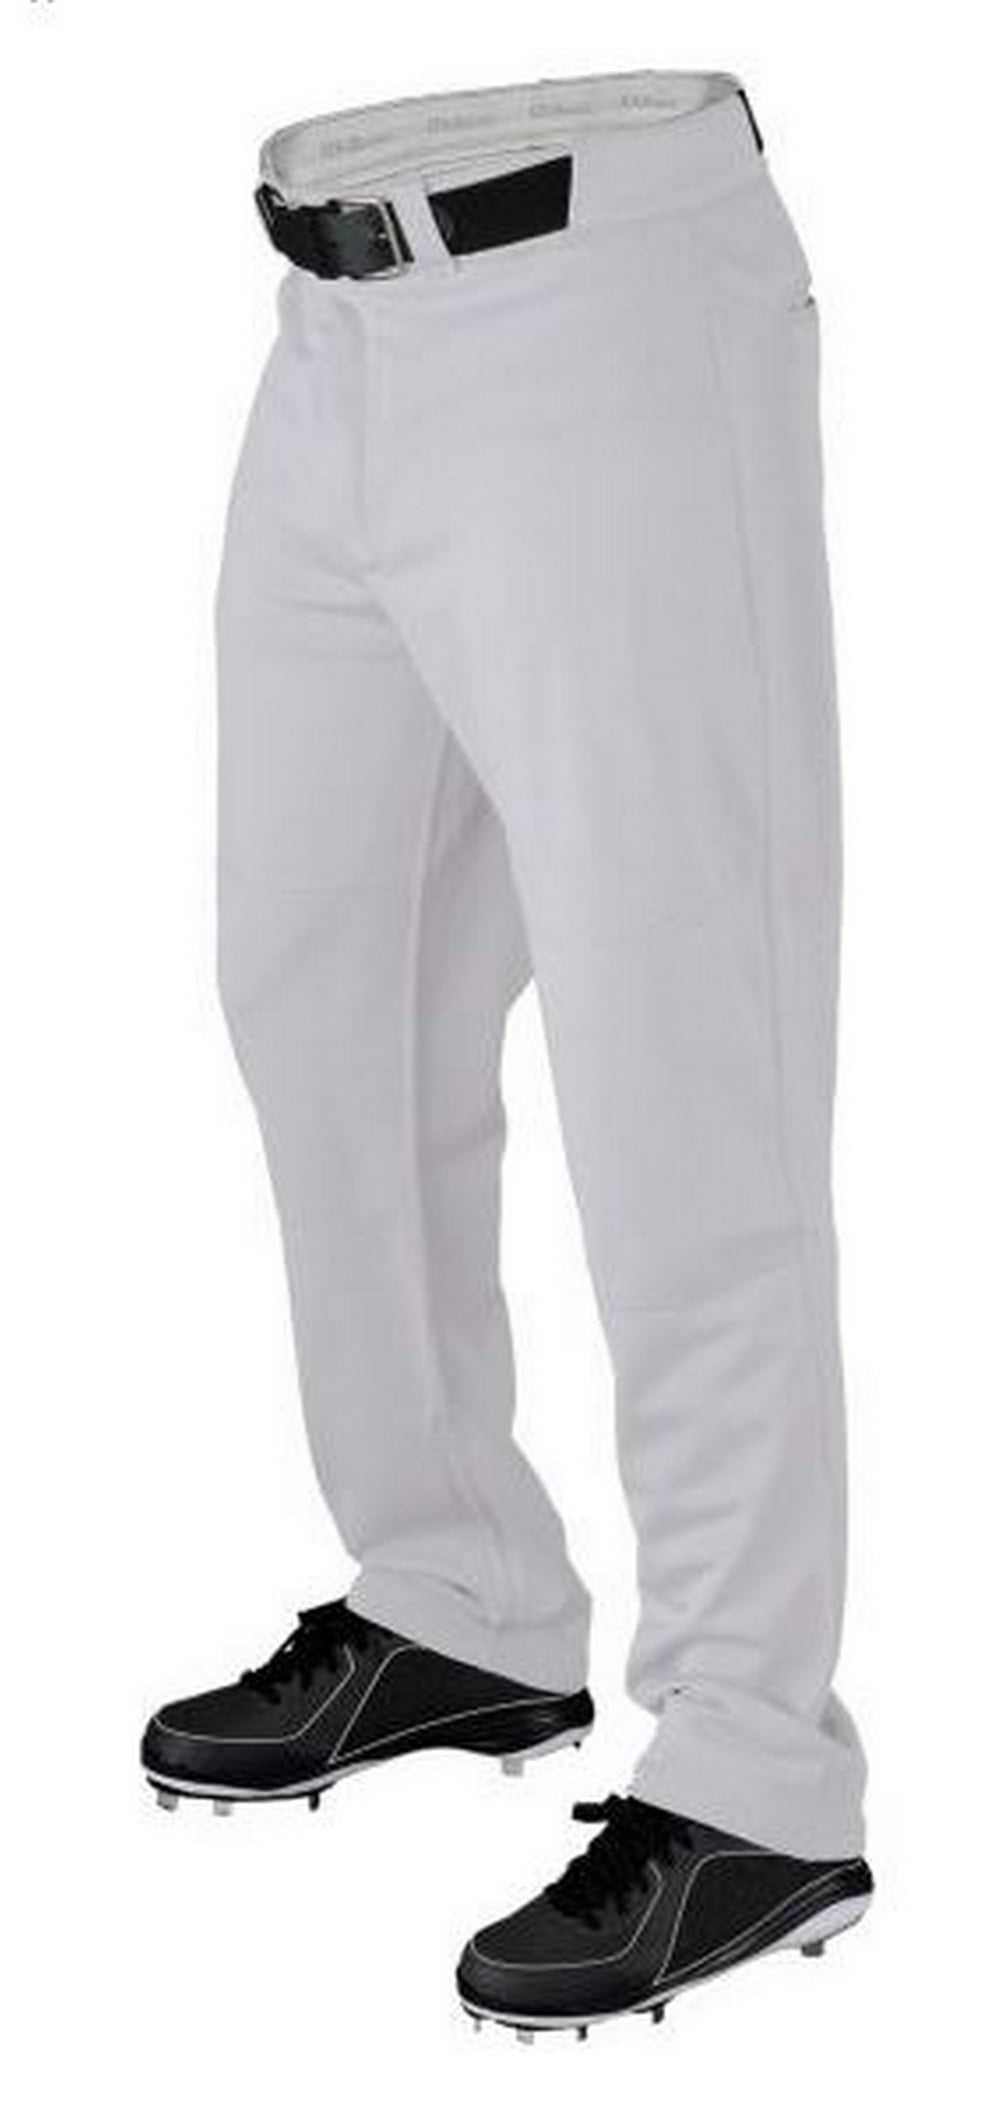 Wilson Adult Men's Baseball Softball Pants Grey WTA4440 free shipping 